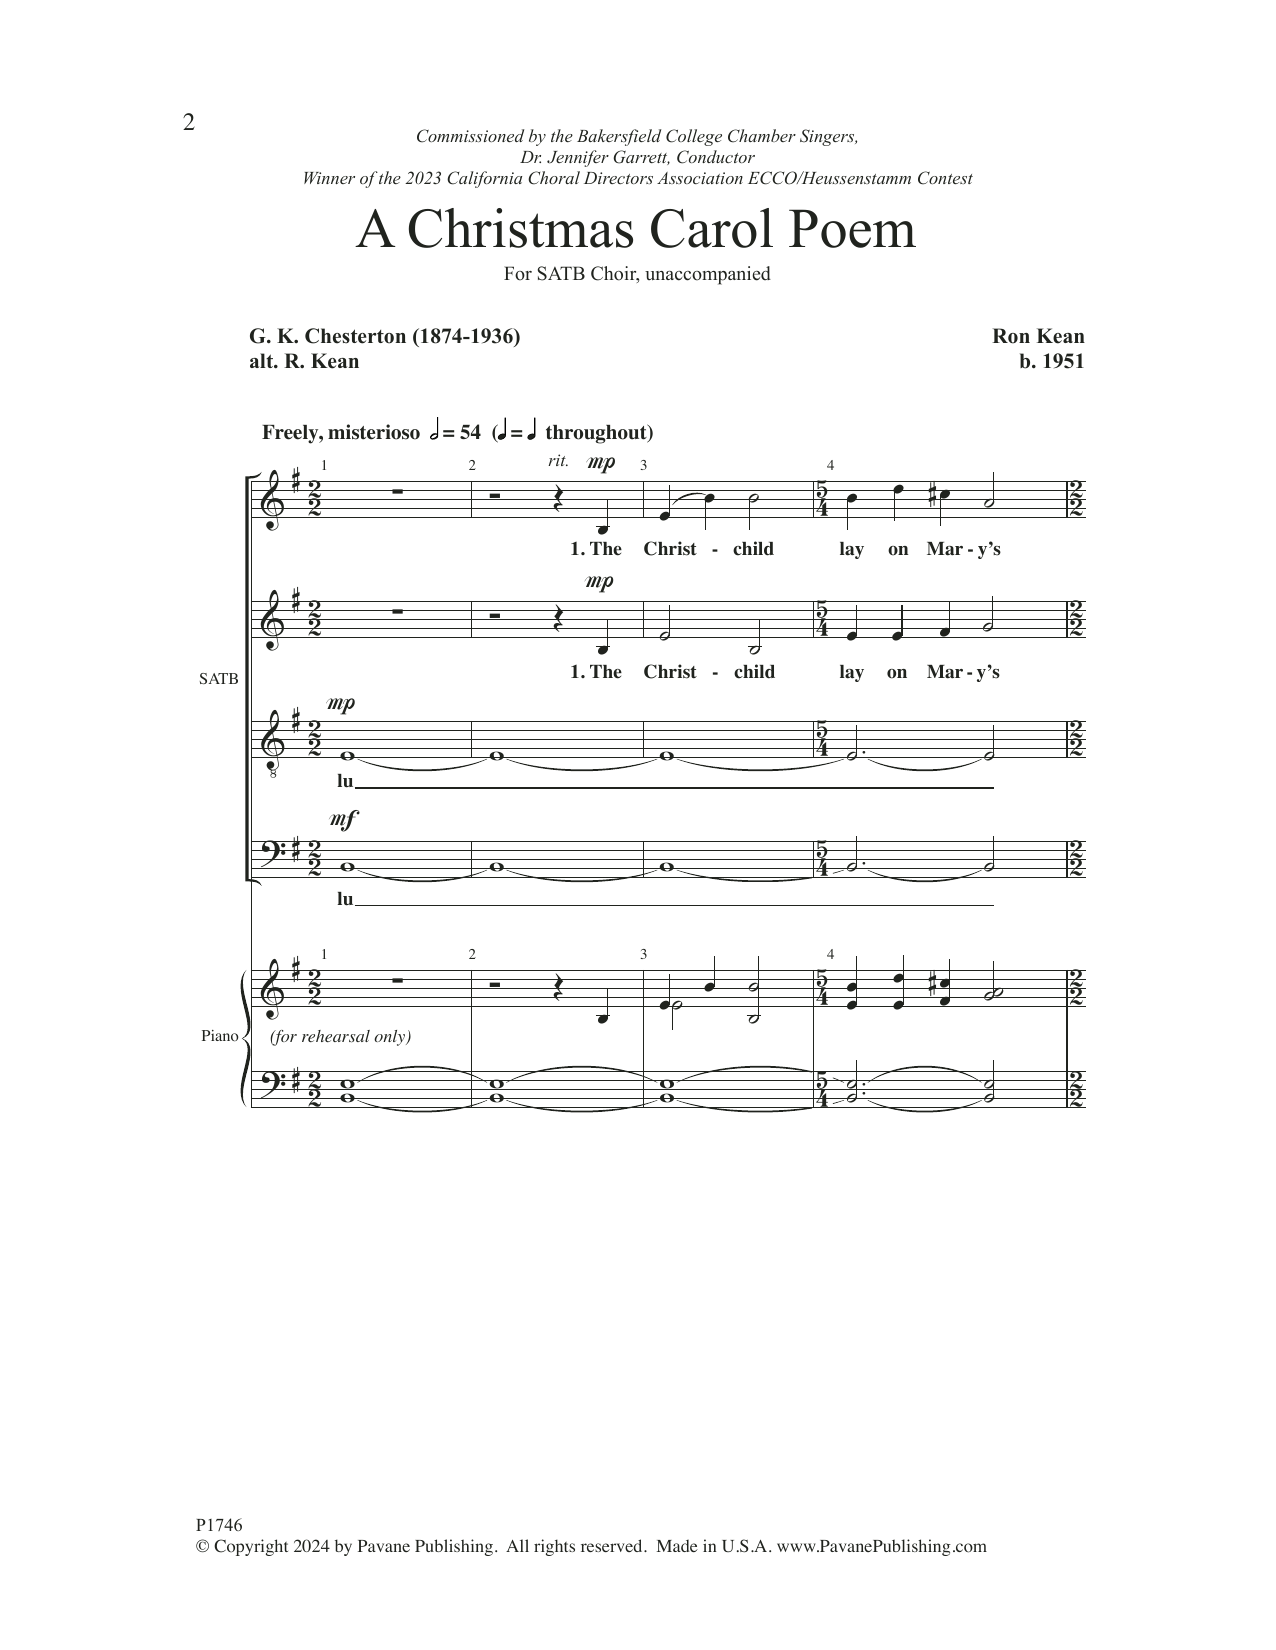 Ron Kean A Christmas Carol Poem sheet music notes printable PDF score